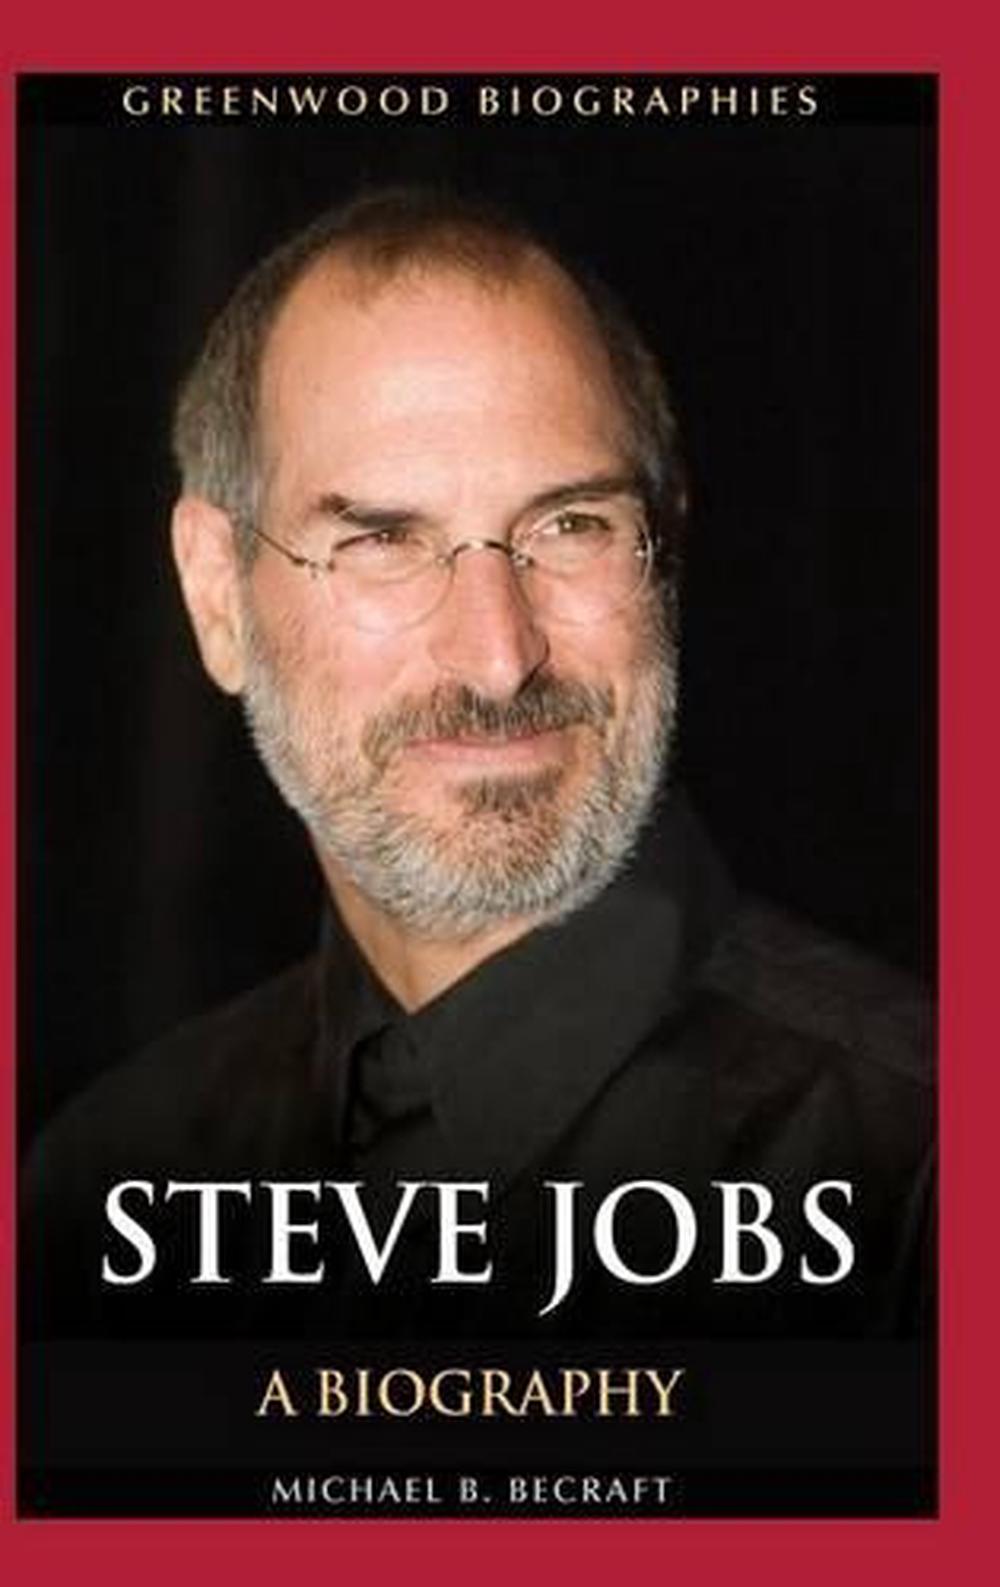 biography.com steve jobs